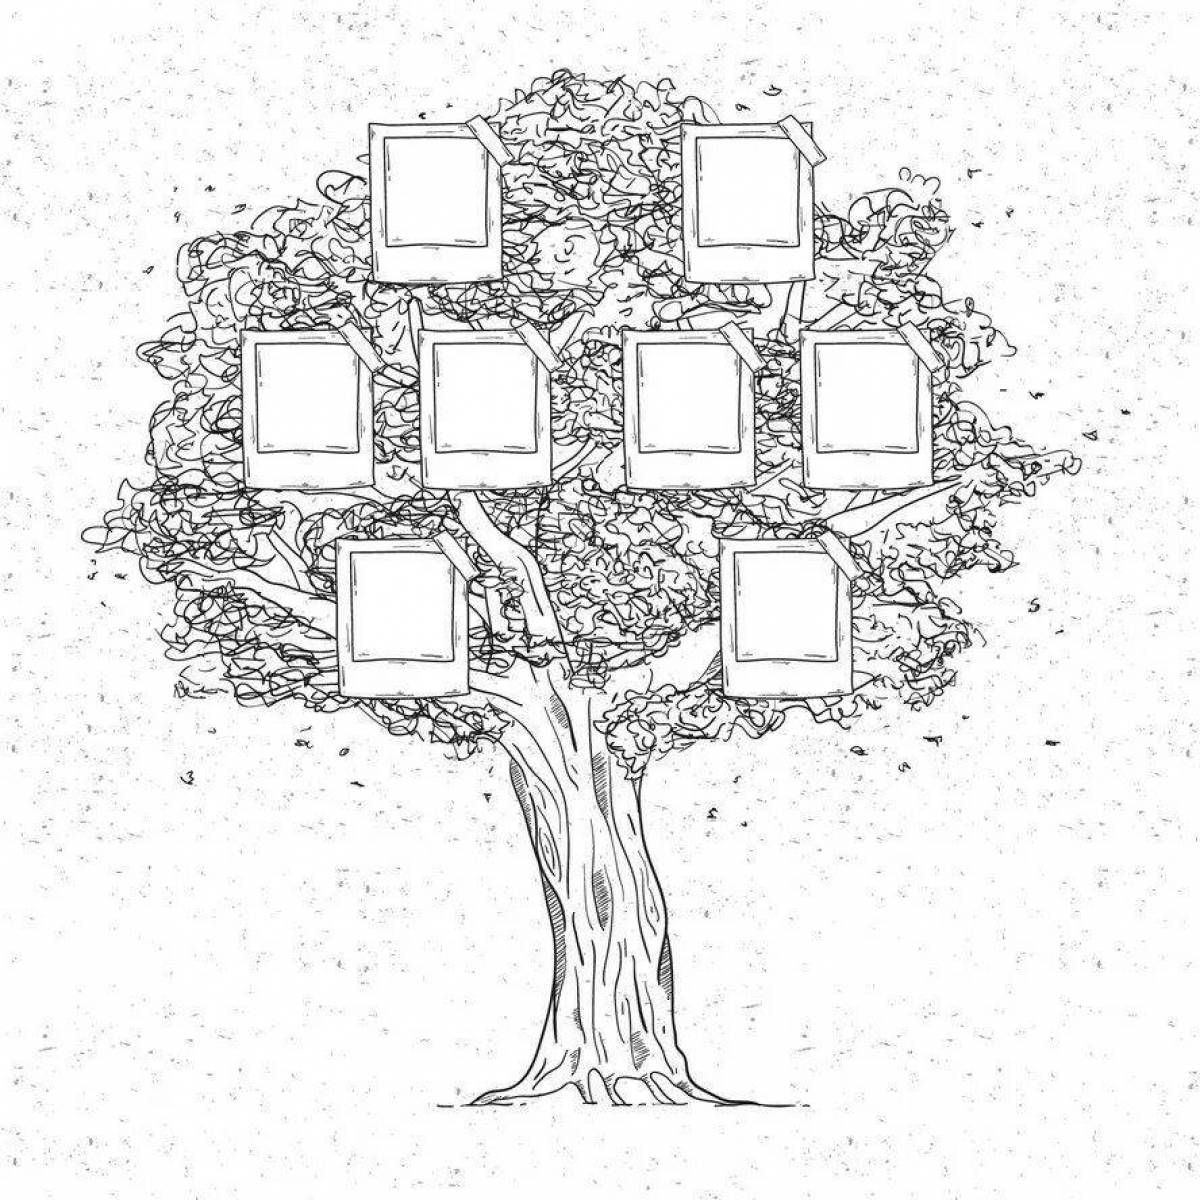 Joyful family tree coloring page